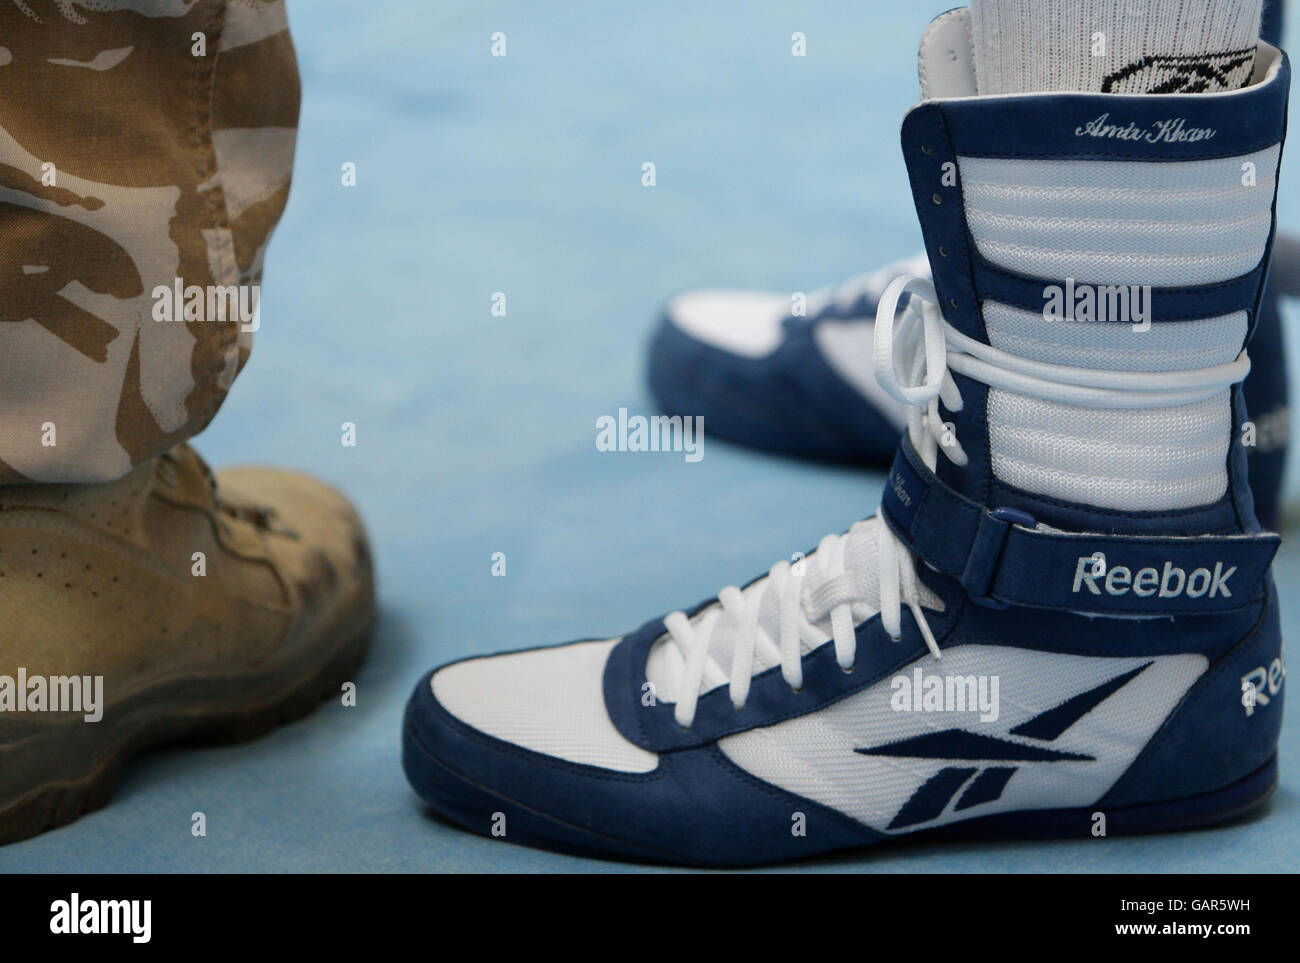 AJF,blue reebok boxing shoes,www.nalan.com.sg